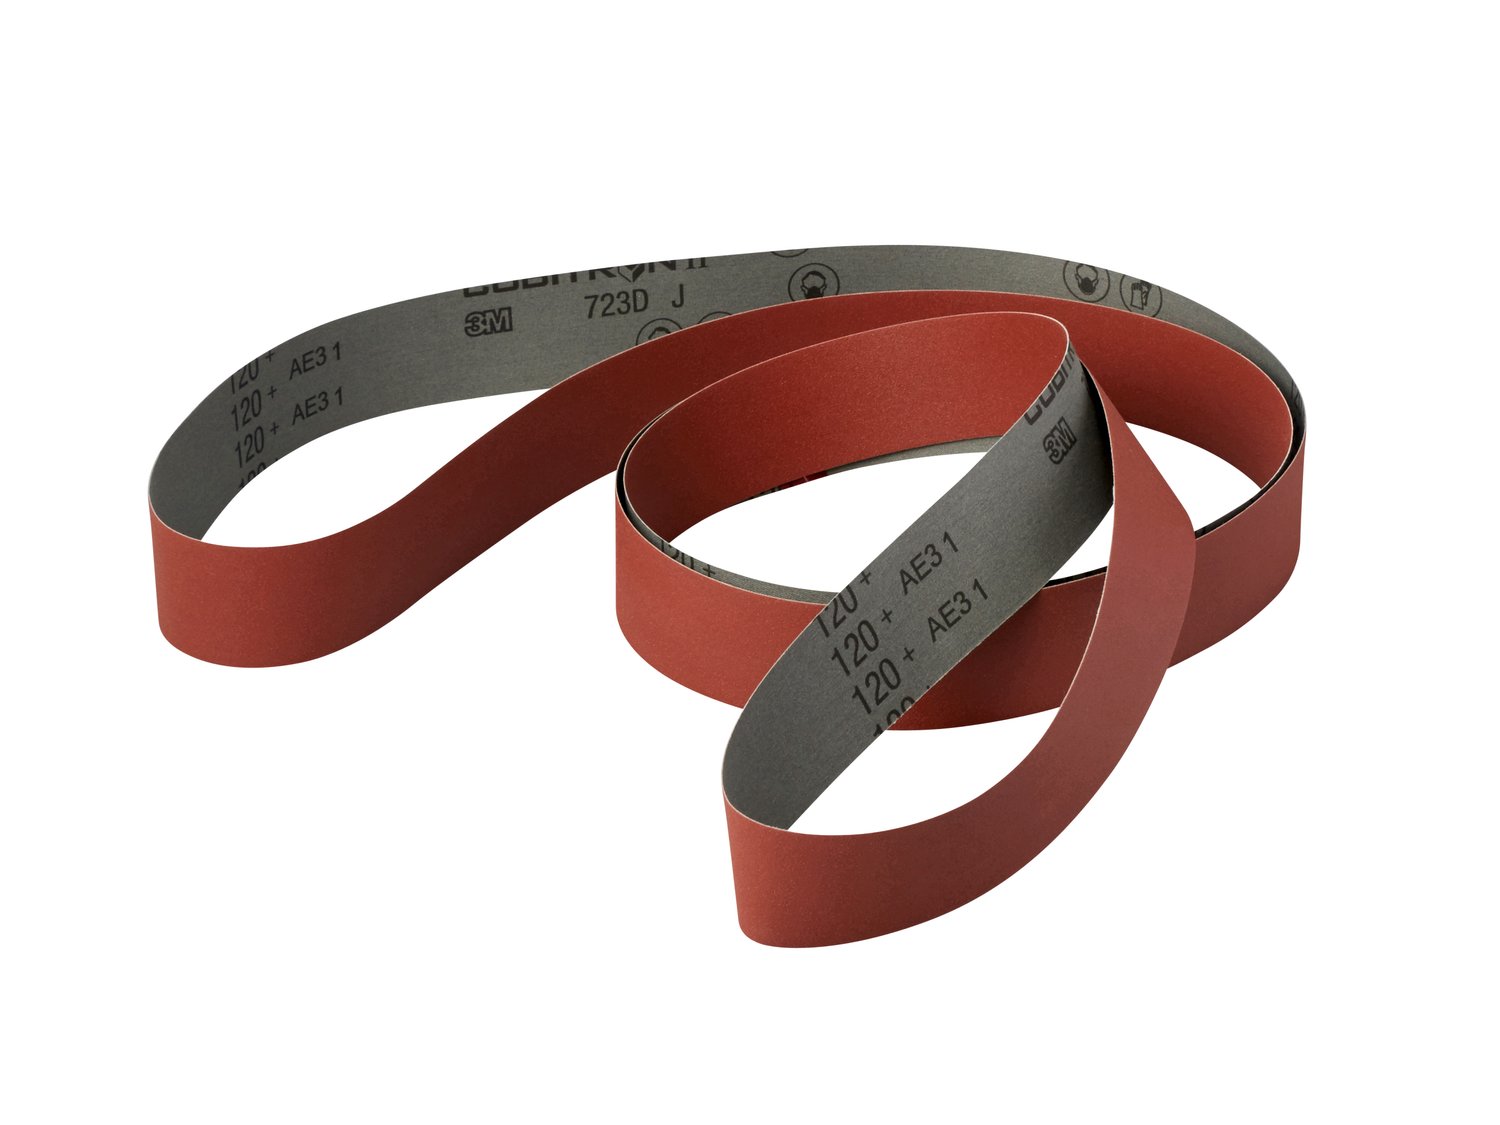 7010515186 - 3M Cubitron ll Cloth Belt 723D, 150+ J-weight, 4 in x 118-5/8 in,
Film-lok, Full-flex